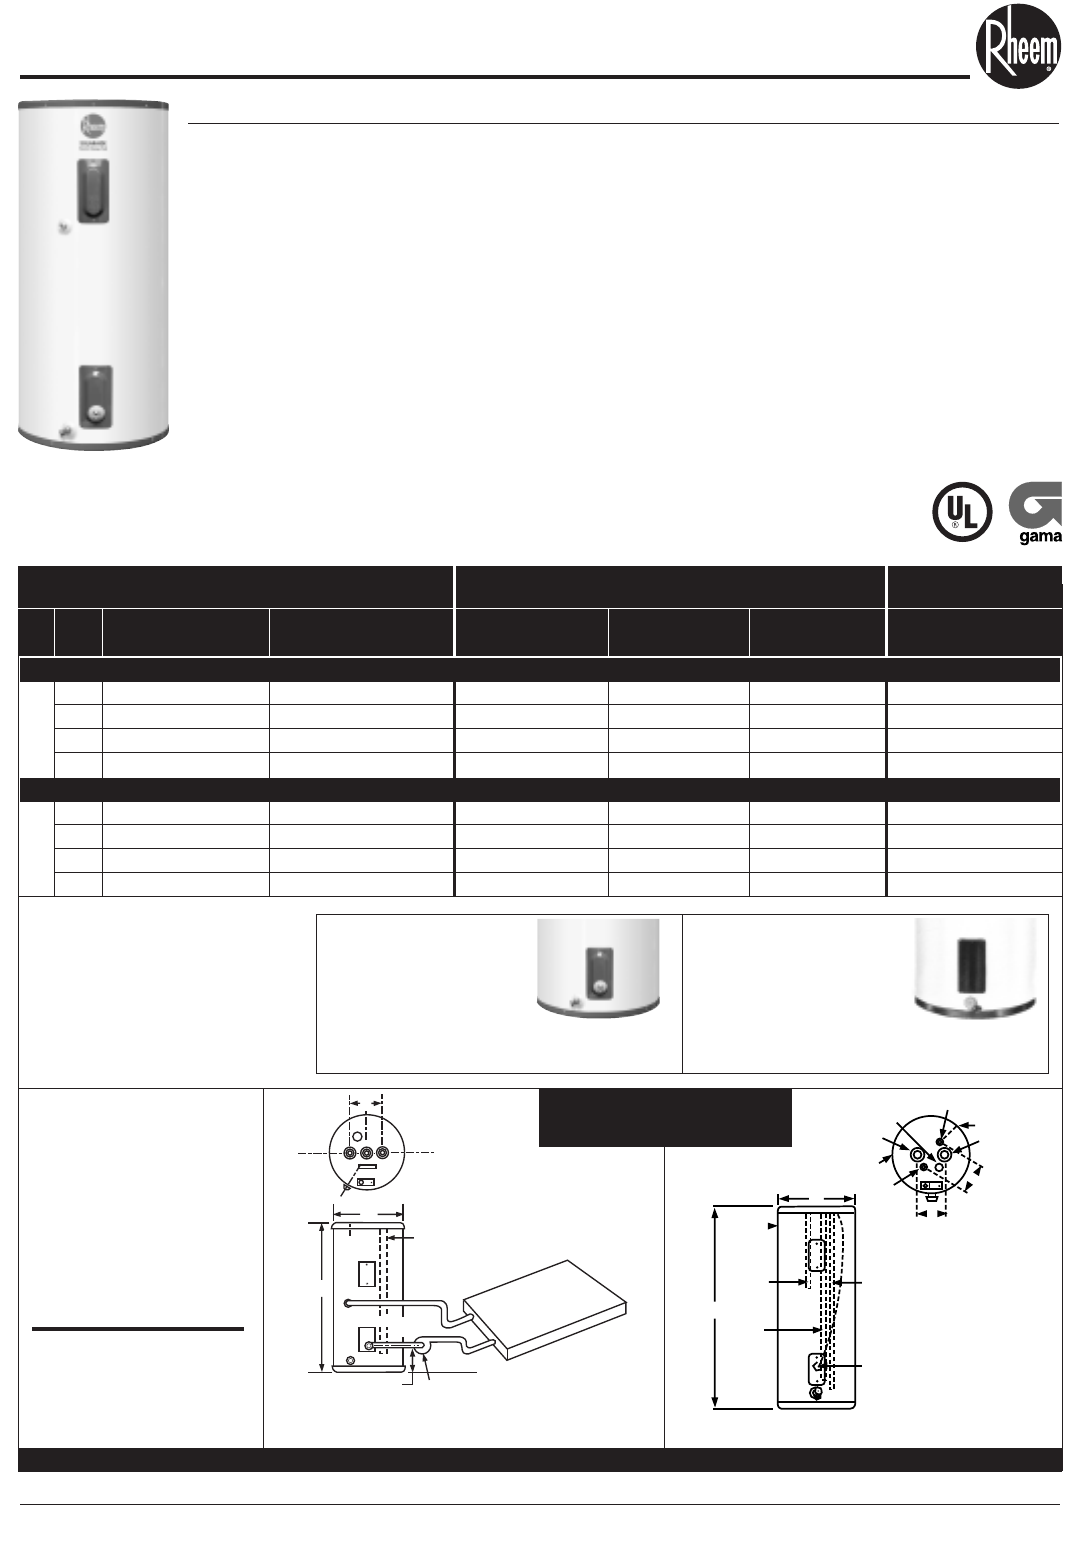 Rheem hot water heater 81v40d manual